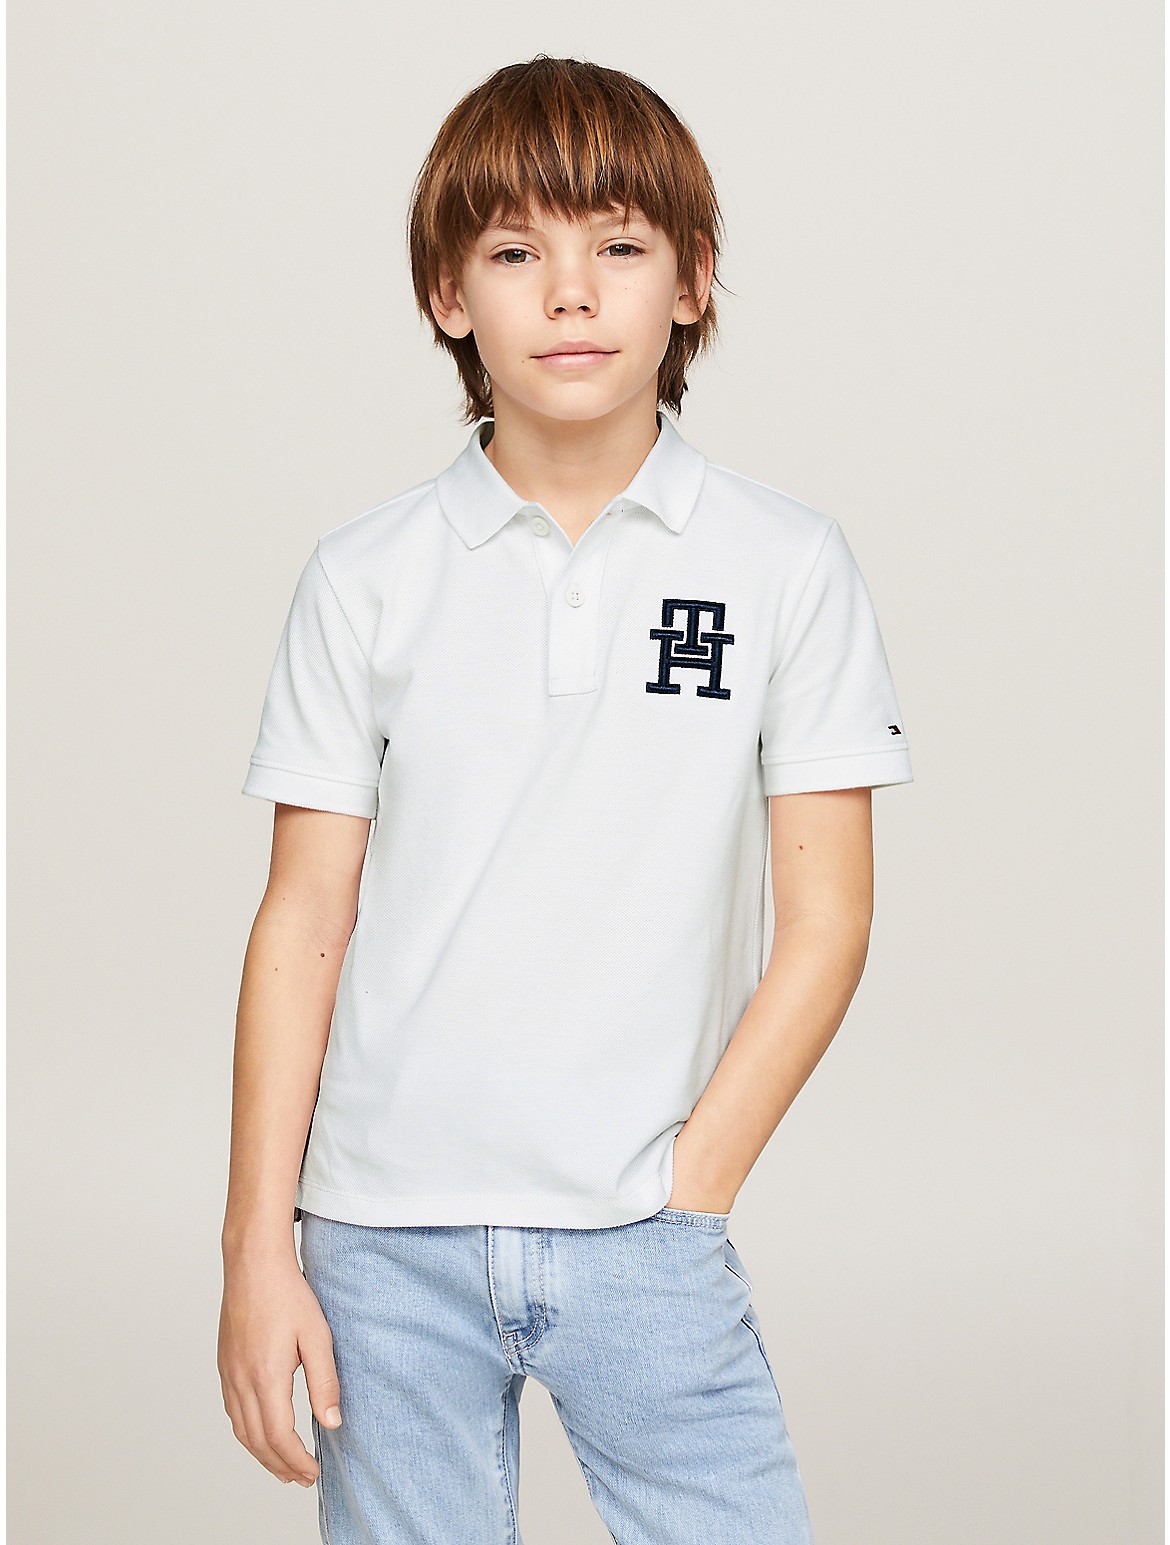 Tommy Hilfiger Boys' Kids' TH Monogram Pique Polo - White/Natural - 10